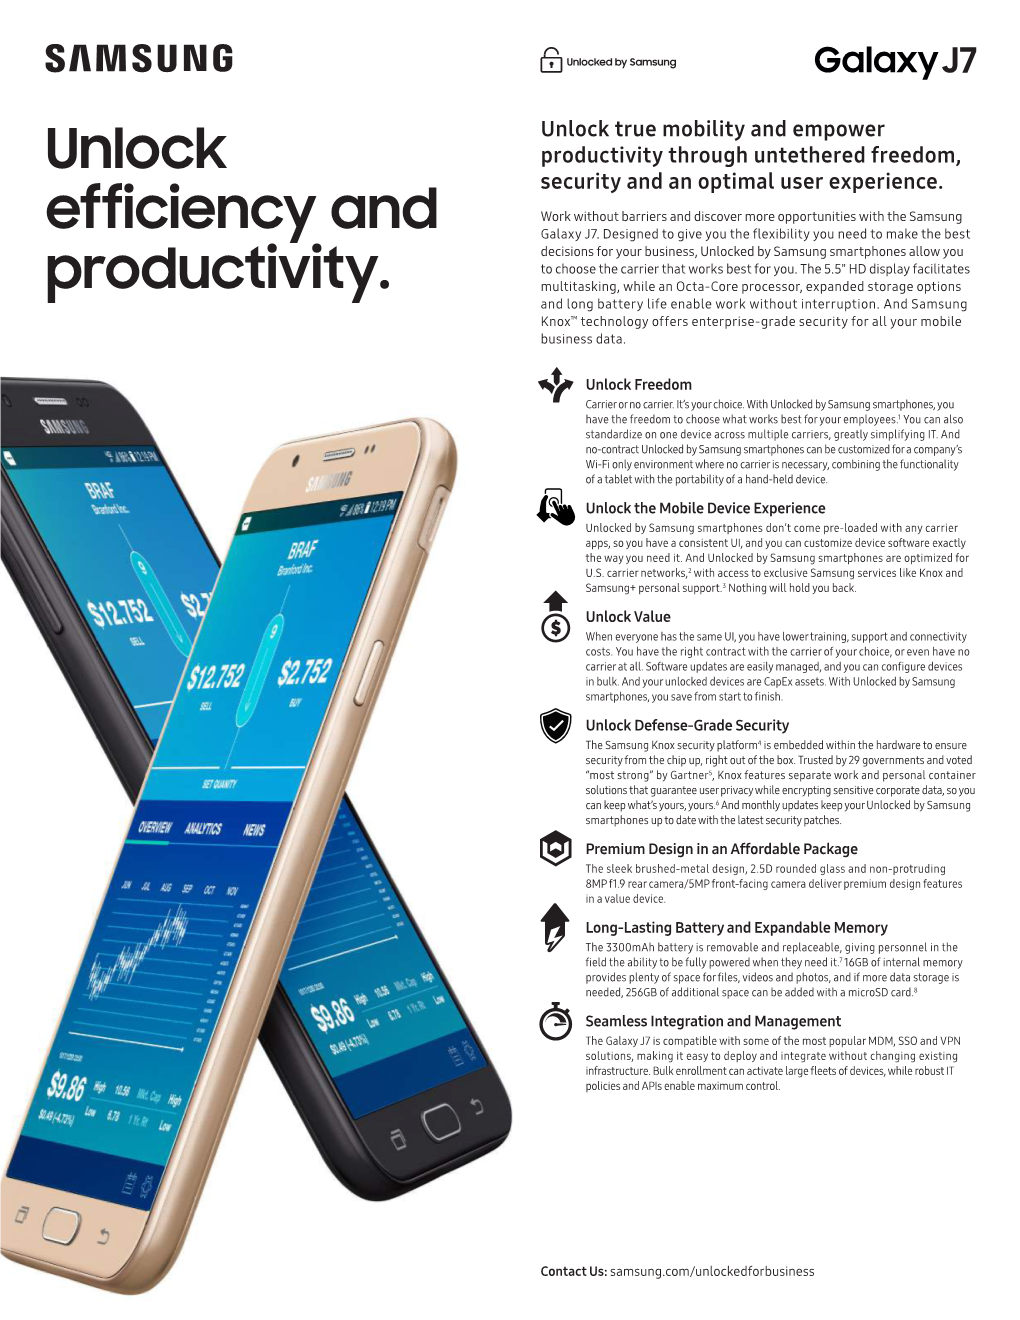 Unlock Efficiency and Productivity